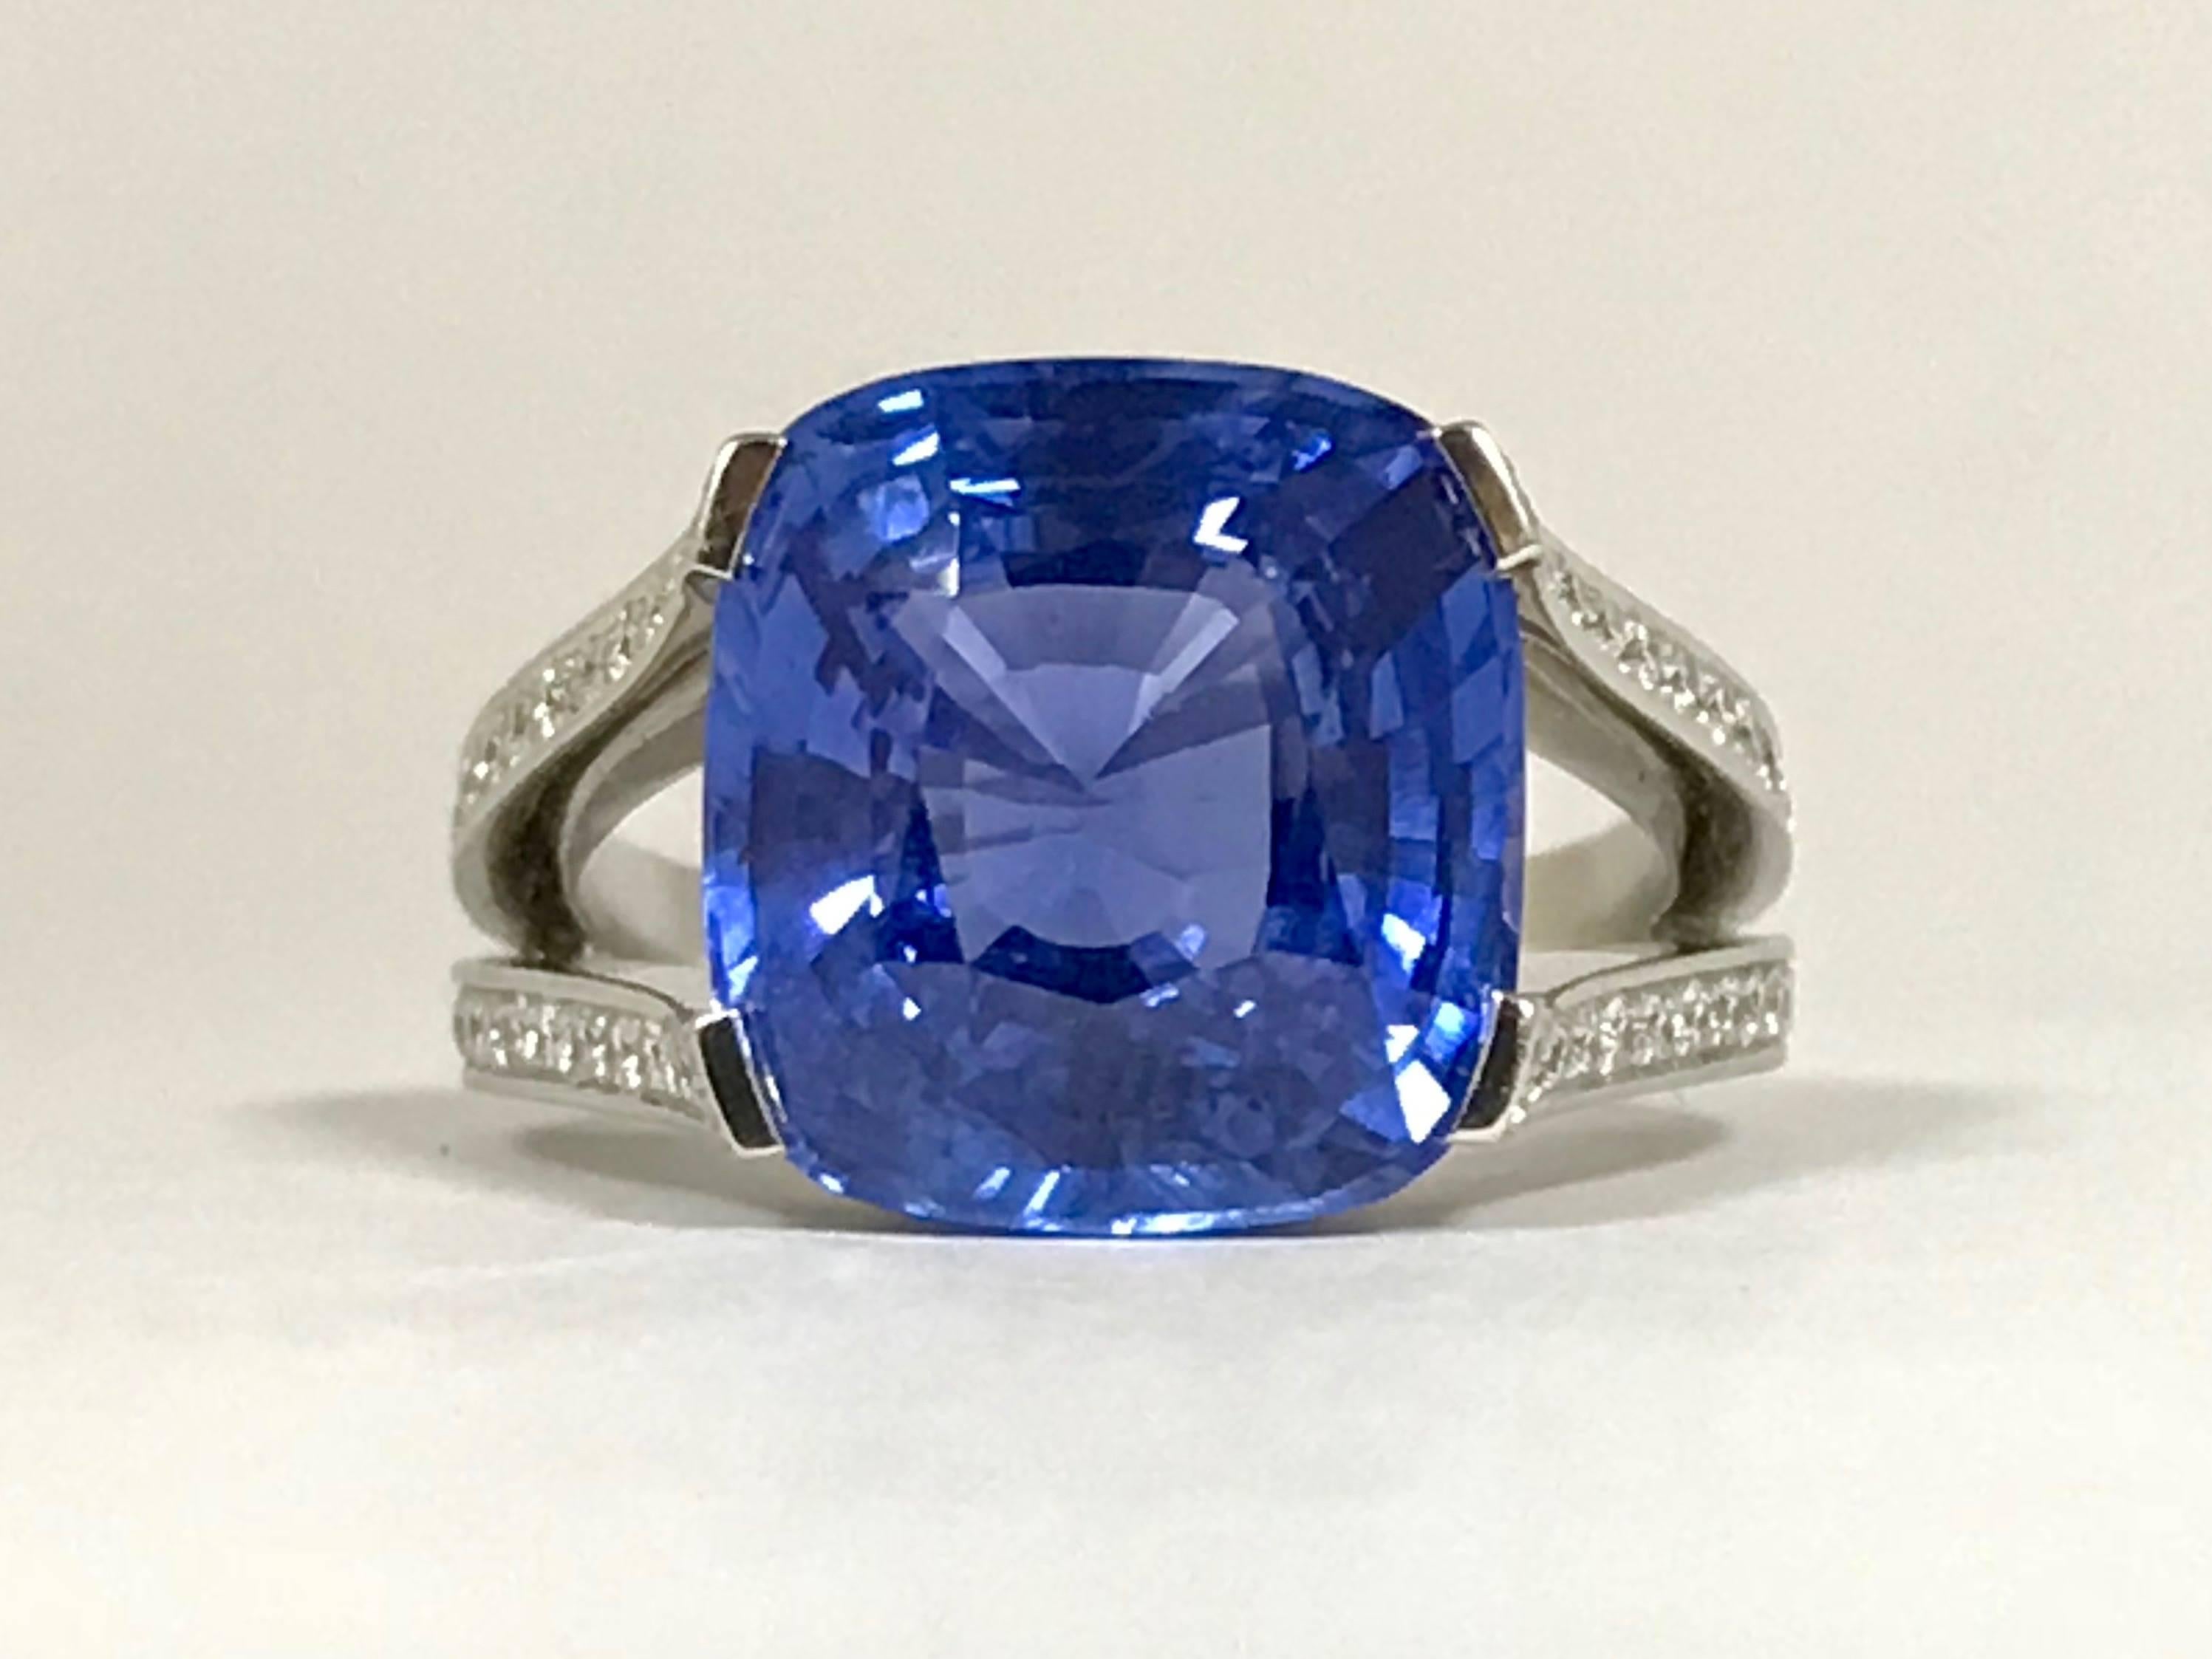 Natural Blue Ceylon Sapphire Shaped Cushion GRS Certified 9.47 Carat and Diamonds Gold Palladium Ring.
Natural Blue Ceylon Sapphire Unheated Shaped Cushion GRS Certified 9.47 Carat 12,36x11,51x7,17 (mm)
216 Diamonds FG/VSSI 0,87 Carat
Palladium Gold